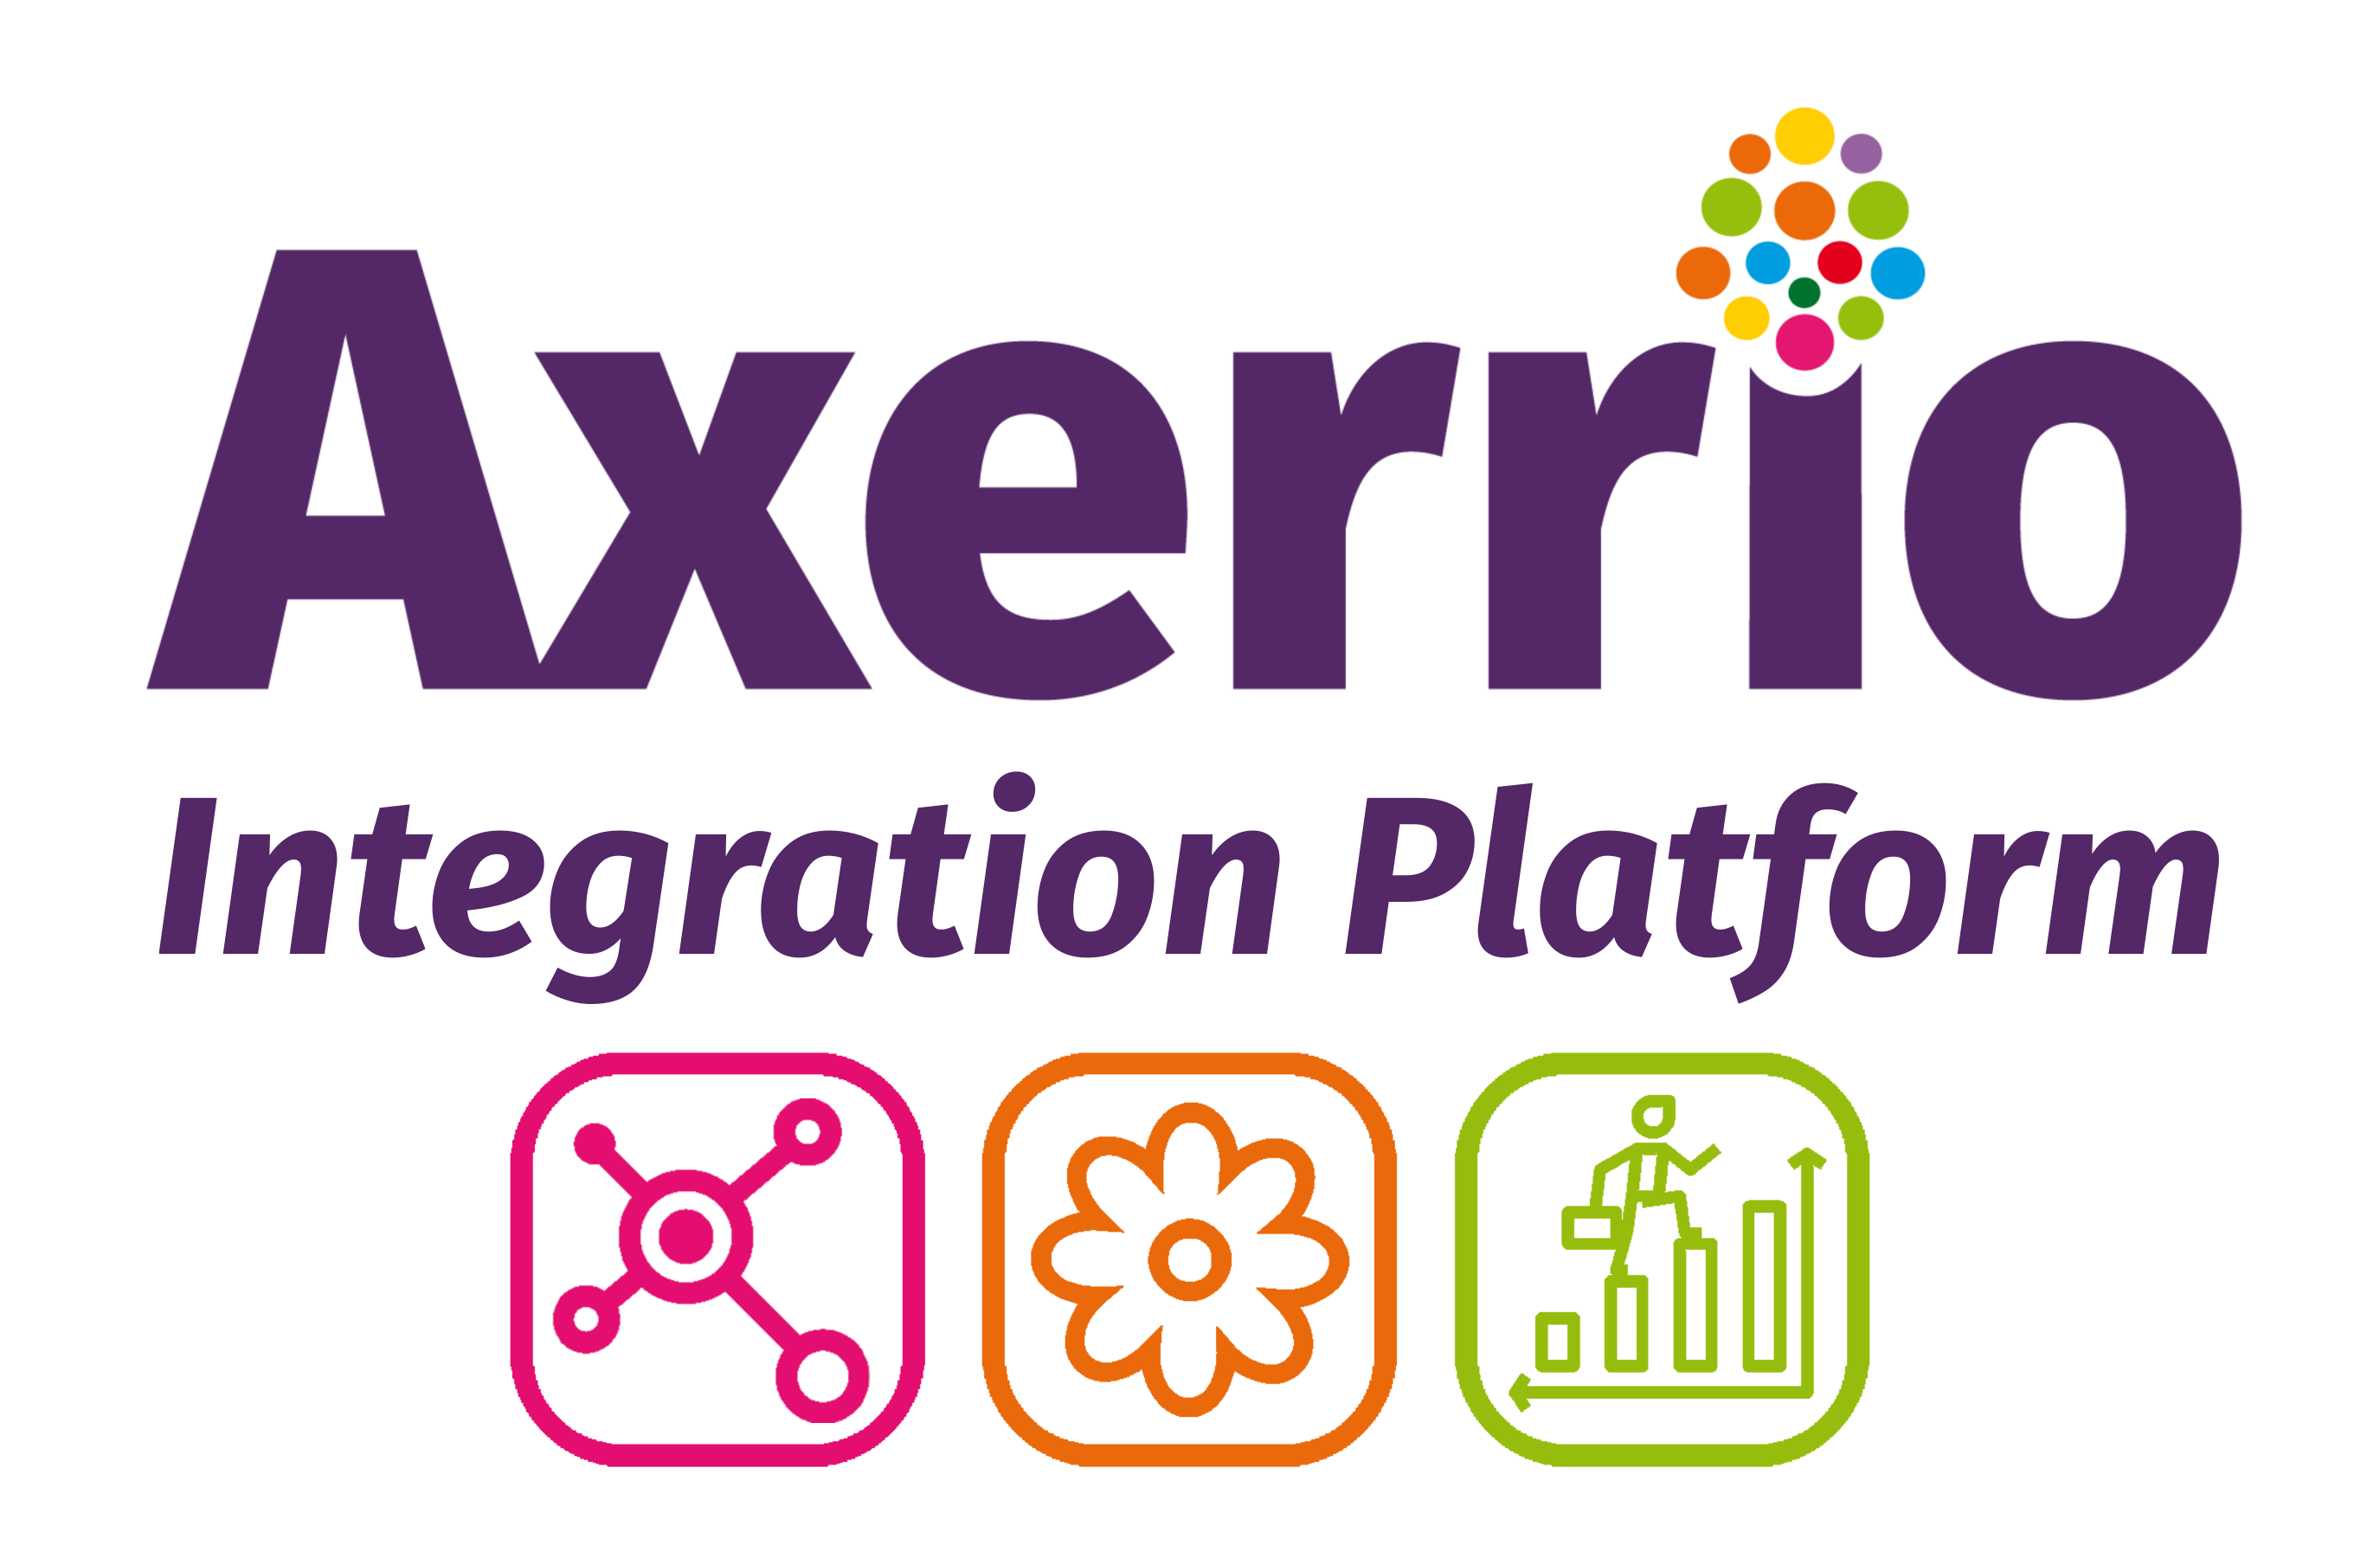 Axerrio-Integration-Platform-Logo-Purple-Icons-Large